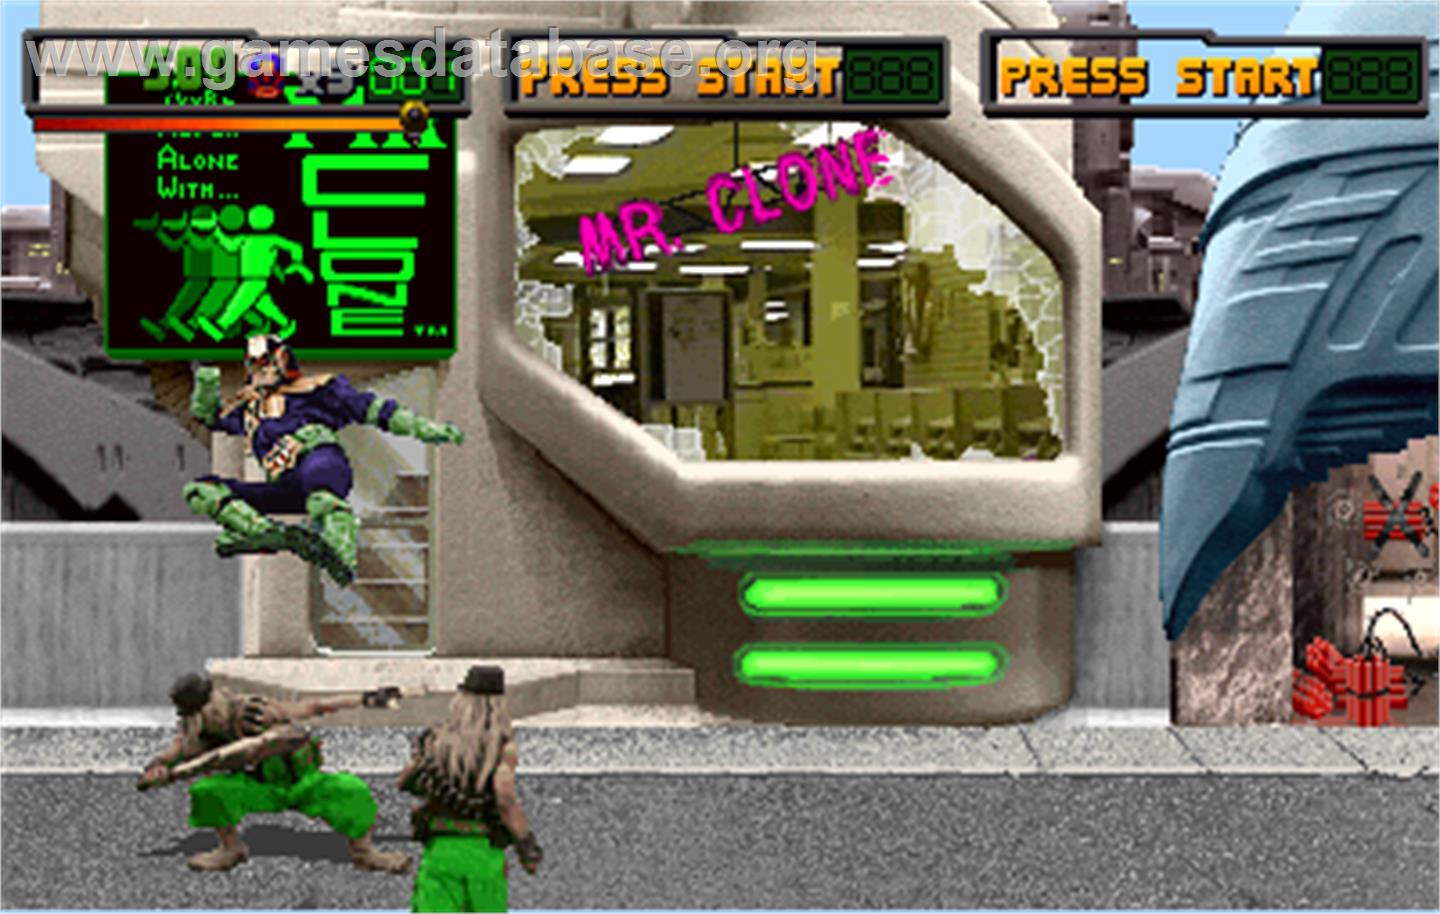 Judge Dredd - Arcade - Artwork - In Game